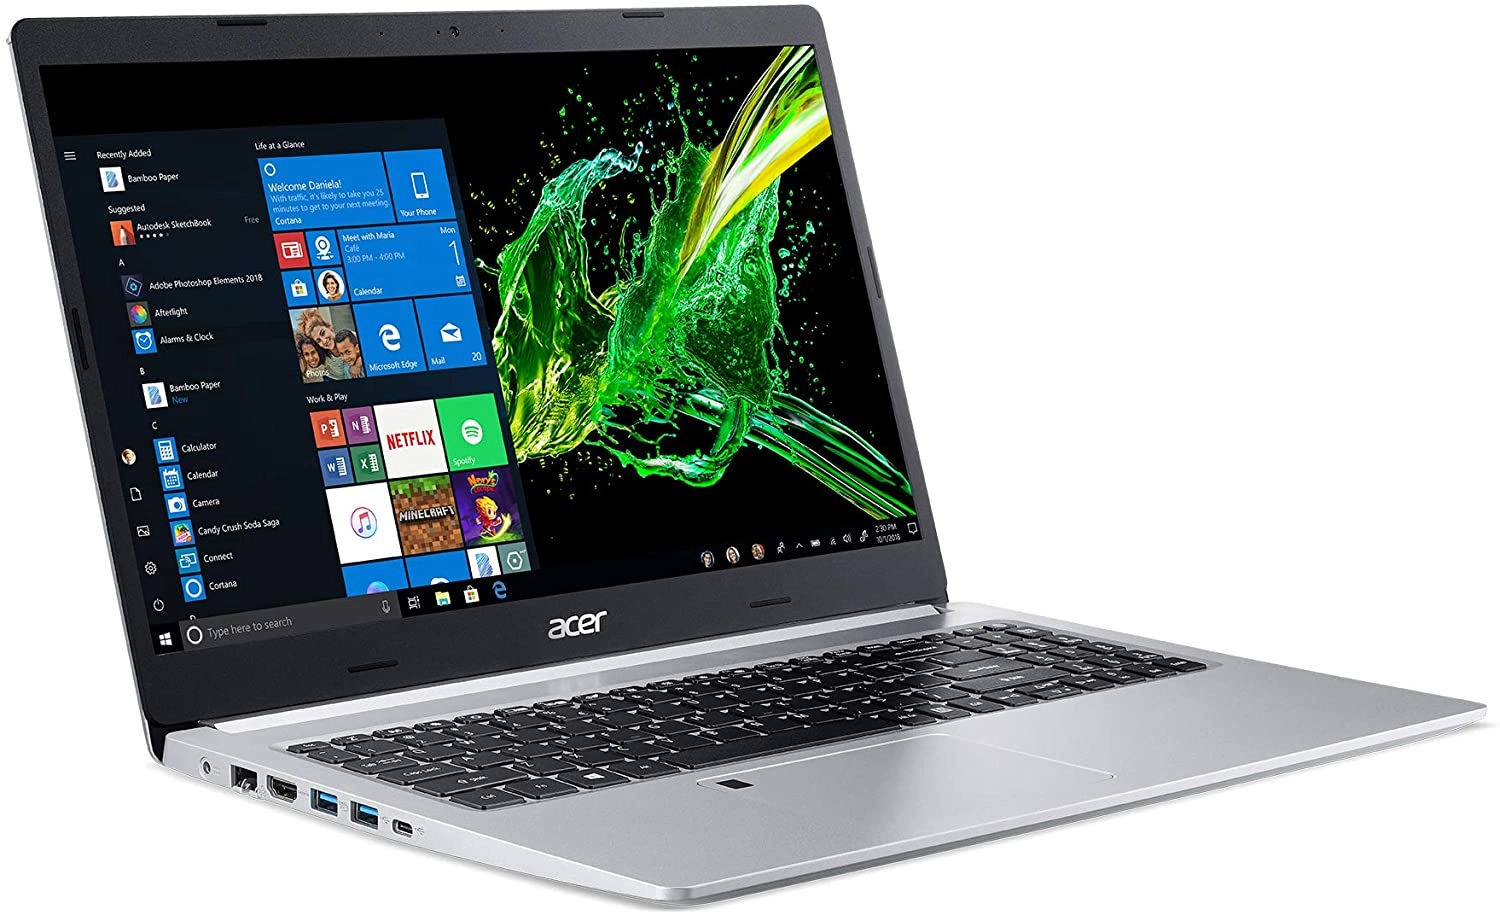 Acer A515-54-51DJ laptop image